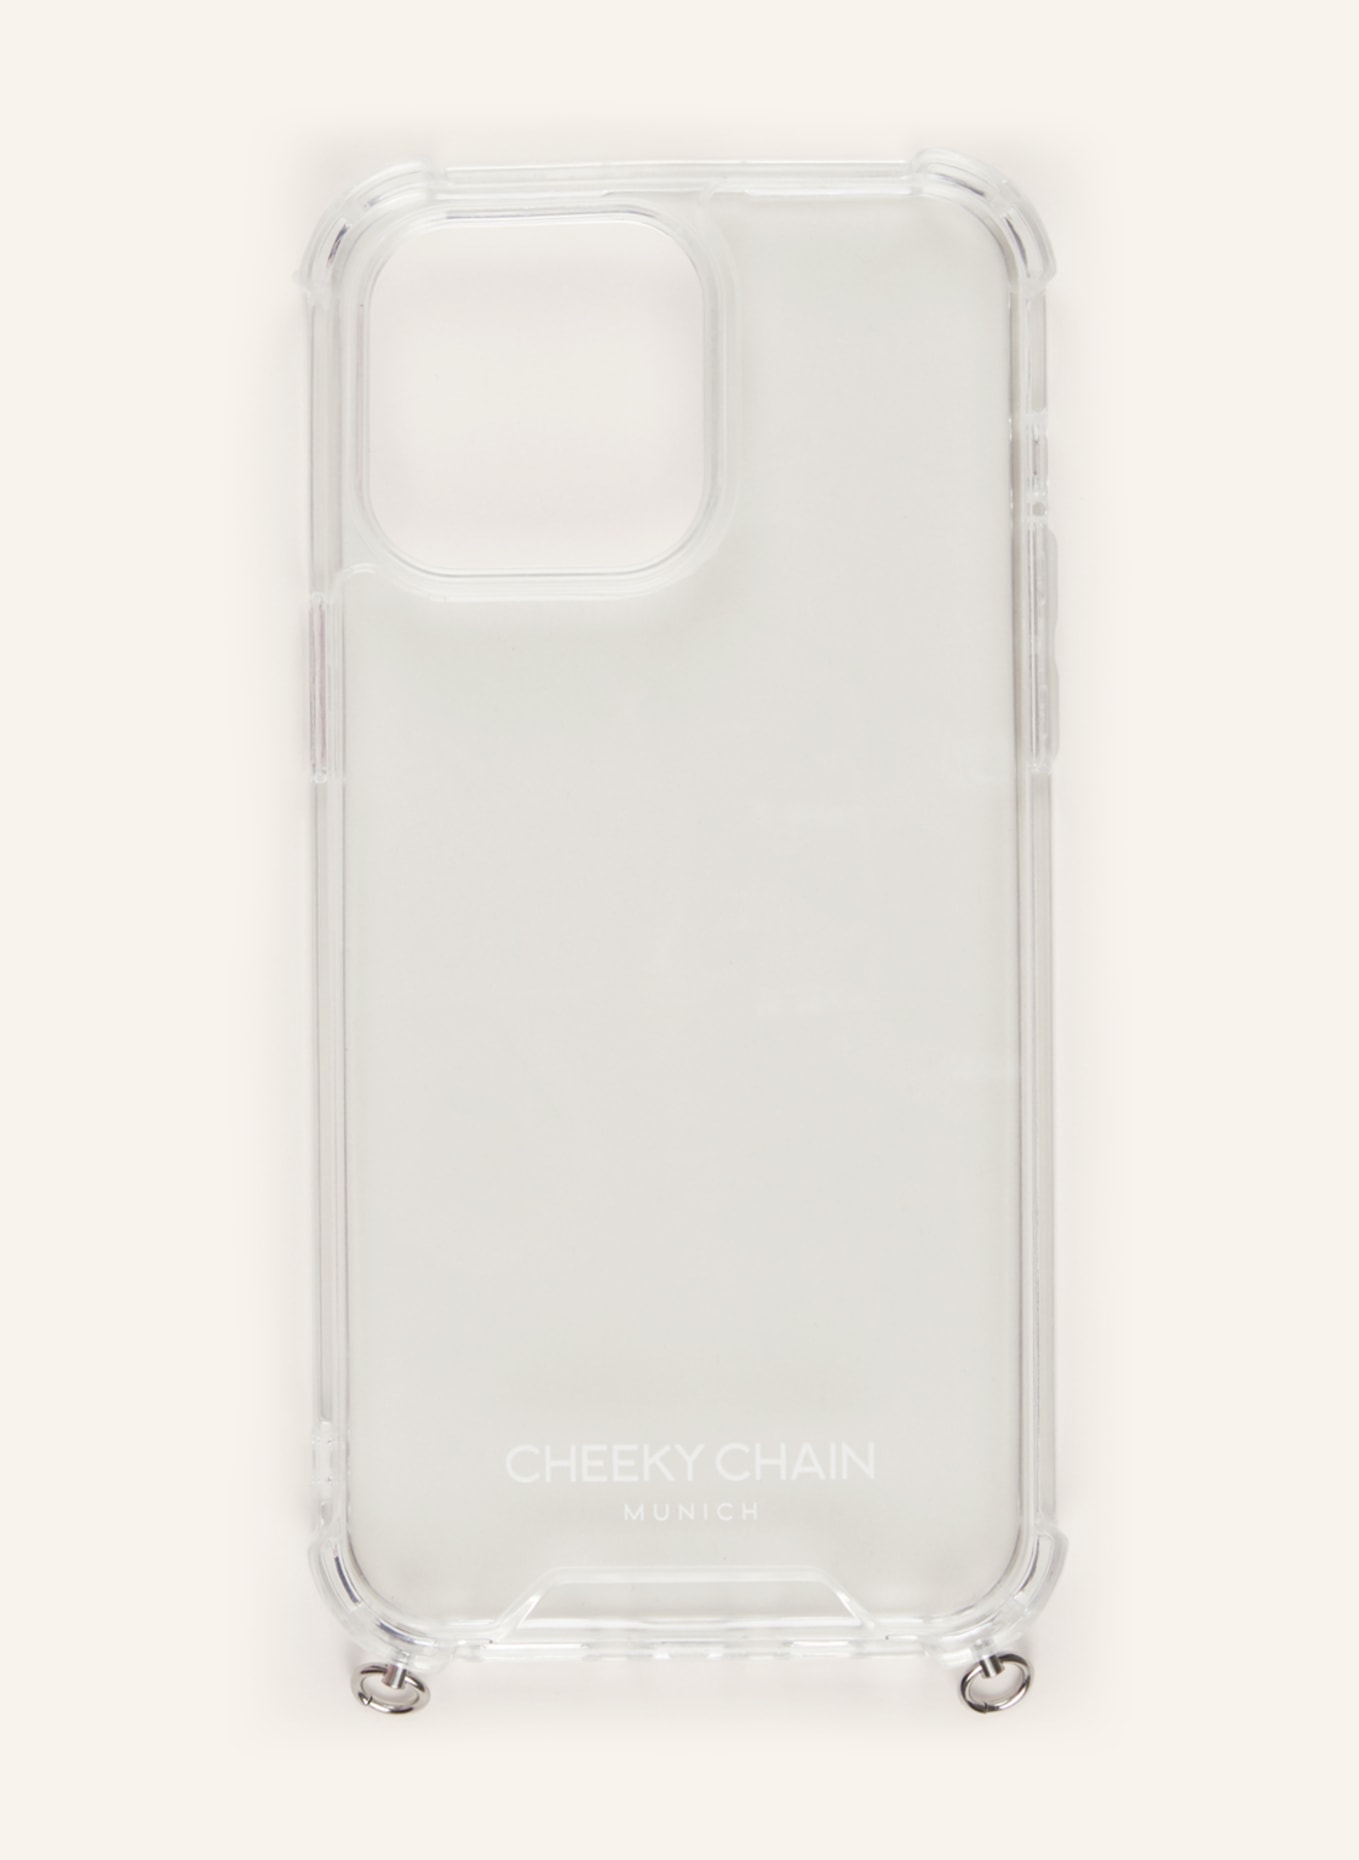 CHEEKY CHAIN MUNICH Pouzdro na smartphone, Barva: crystal clear silver (Obrázek 1)